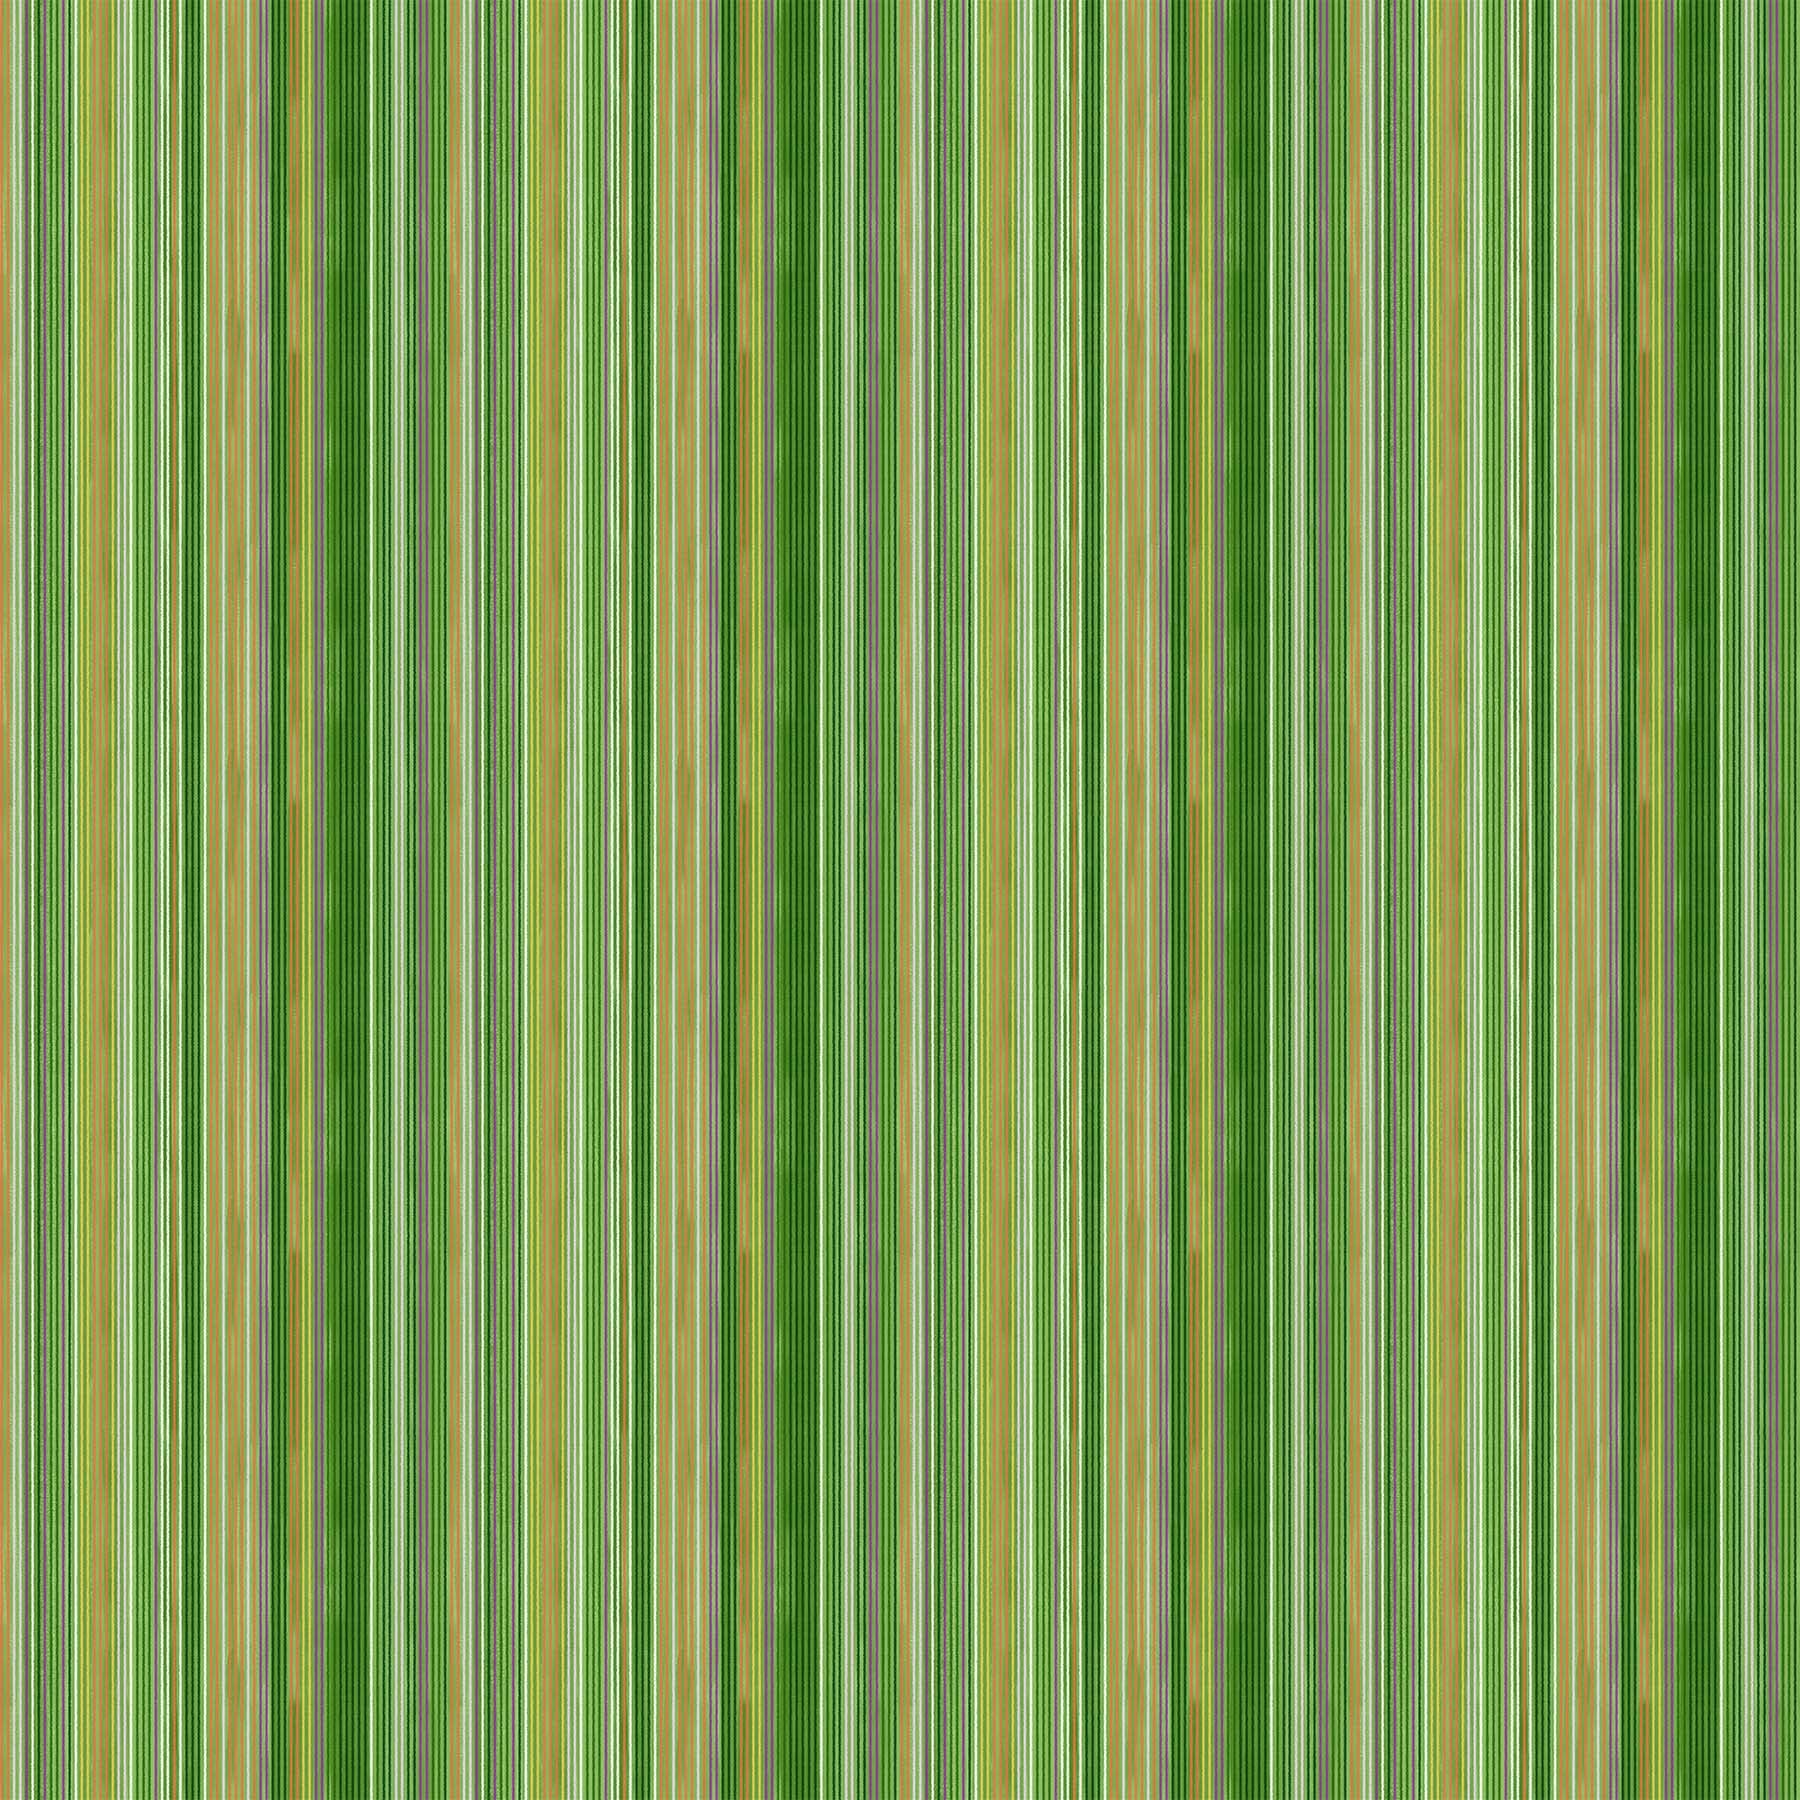 Sunday Green Multi Stripes